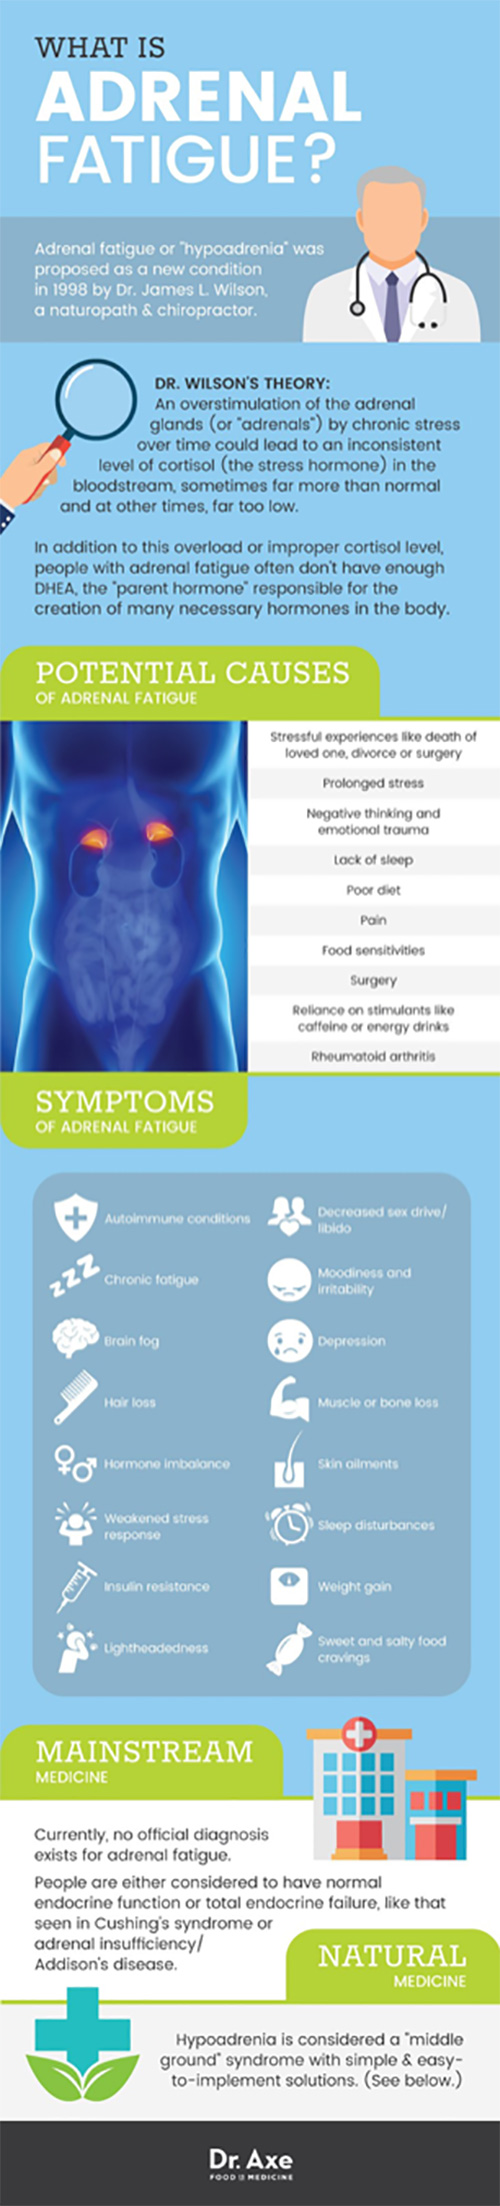 Symptoms of adrenal fatigue syndrome